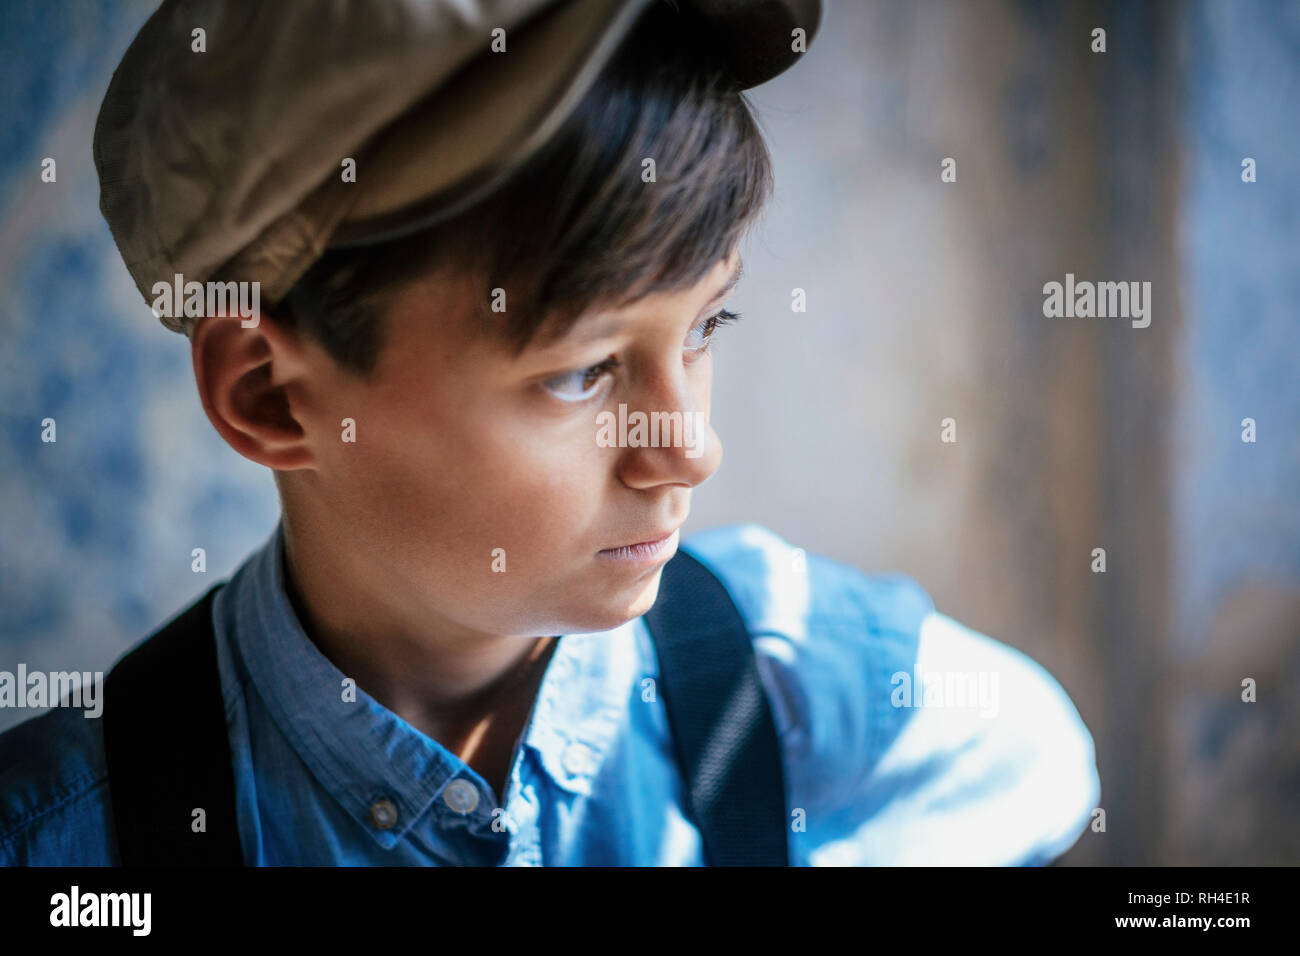 Thoughtful boy in cap looking away Stock Photo